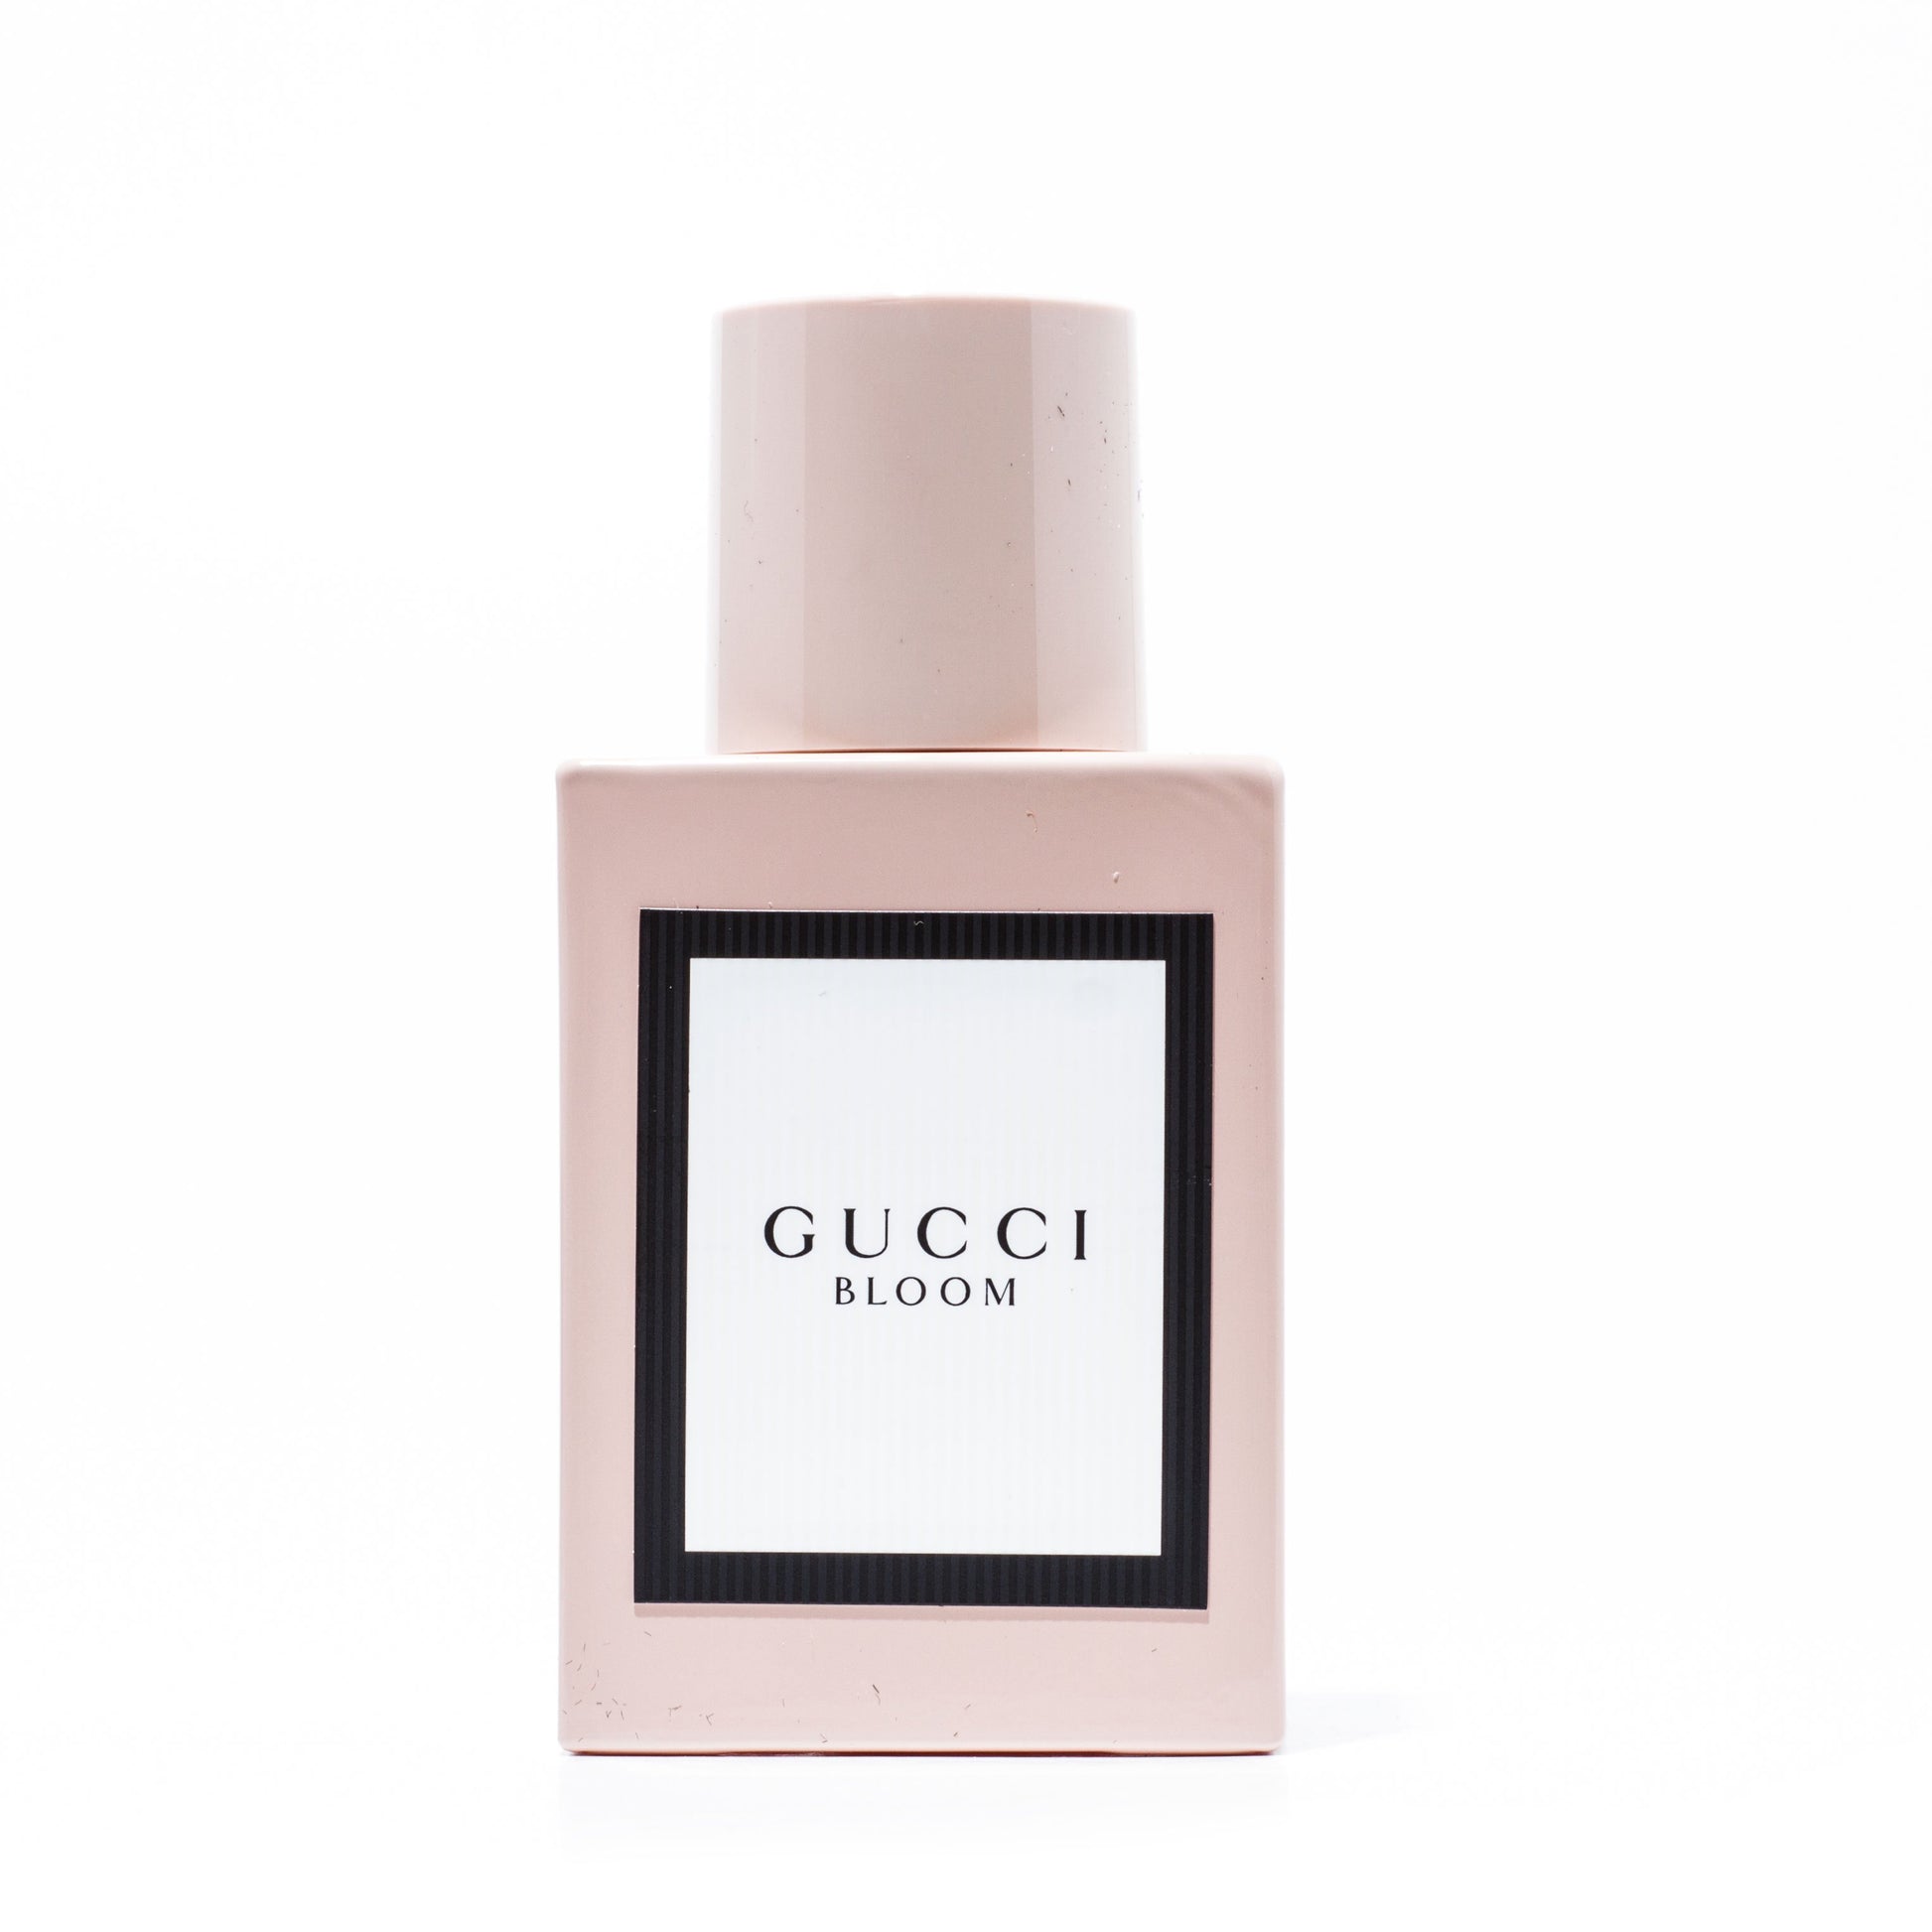 Gucci Bloom Eau de Parfum Spray for Women by Gucci, Product image 4